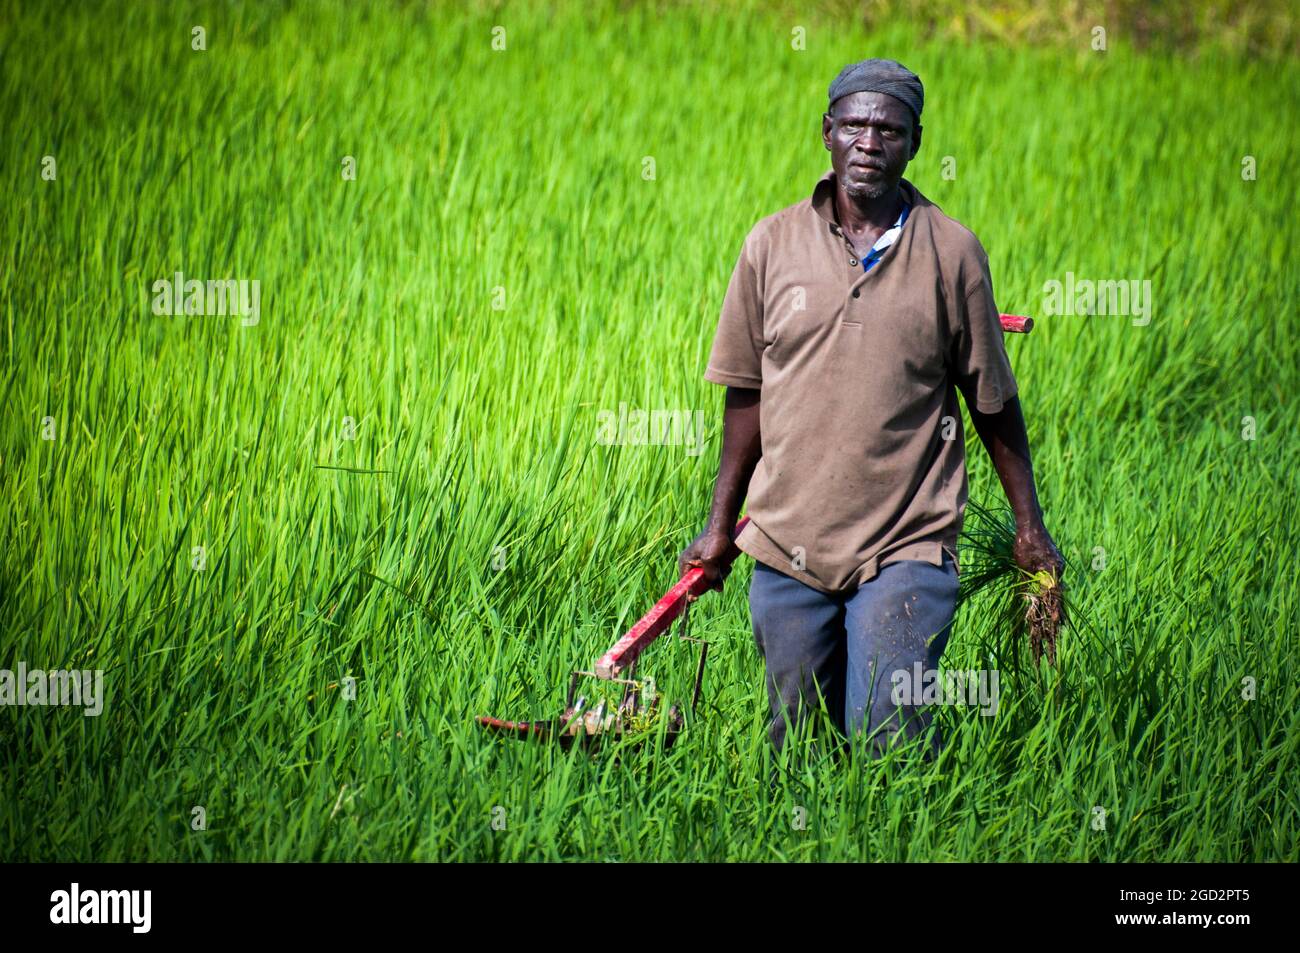 A smallholder farmer in northern Ghana walks through a field ca. 27 October 2015 Stock Photo